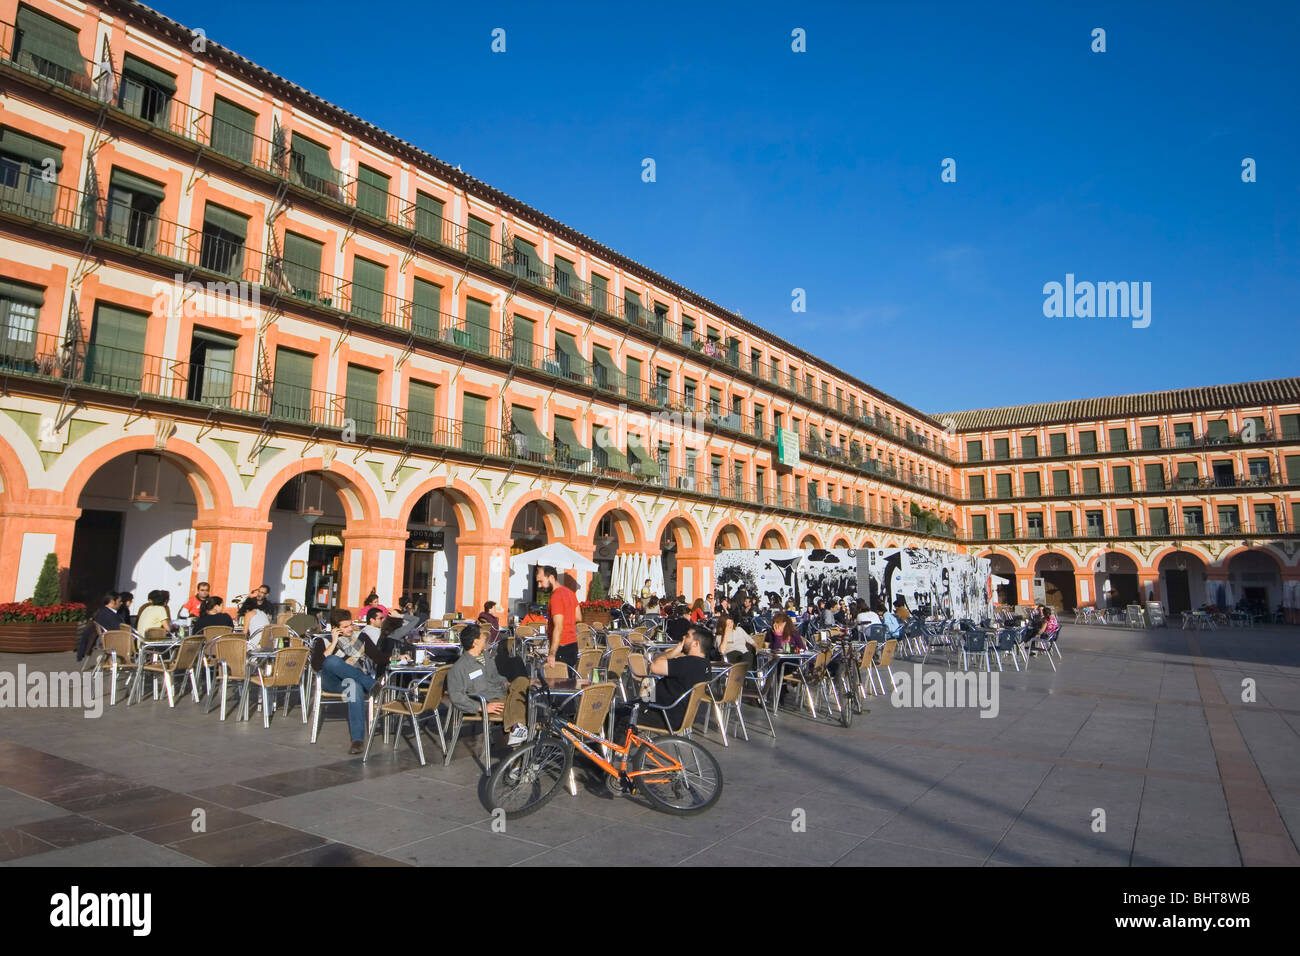 Plaza de la Corredera, Cordoba, Spain. Stock Photo